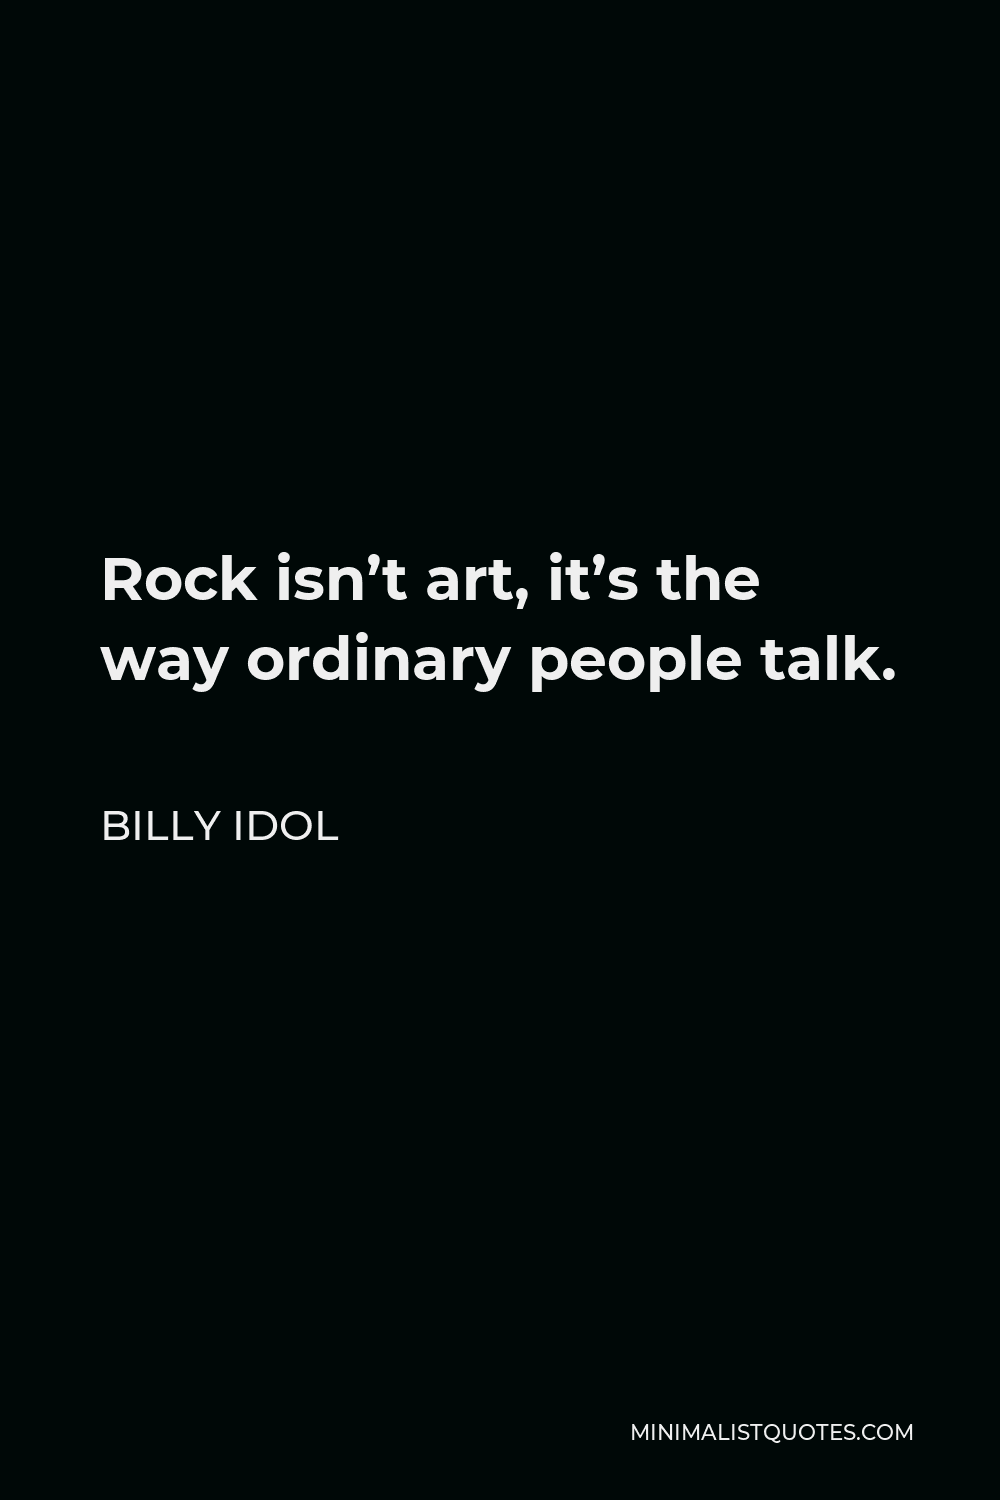 Billy Idol Quote - Rock isn’t art, it’s the way ordinary people talk.